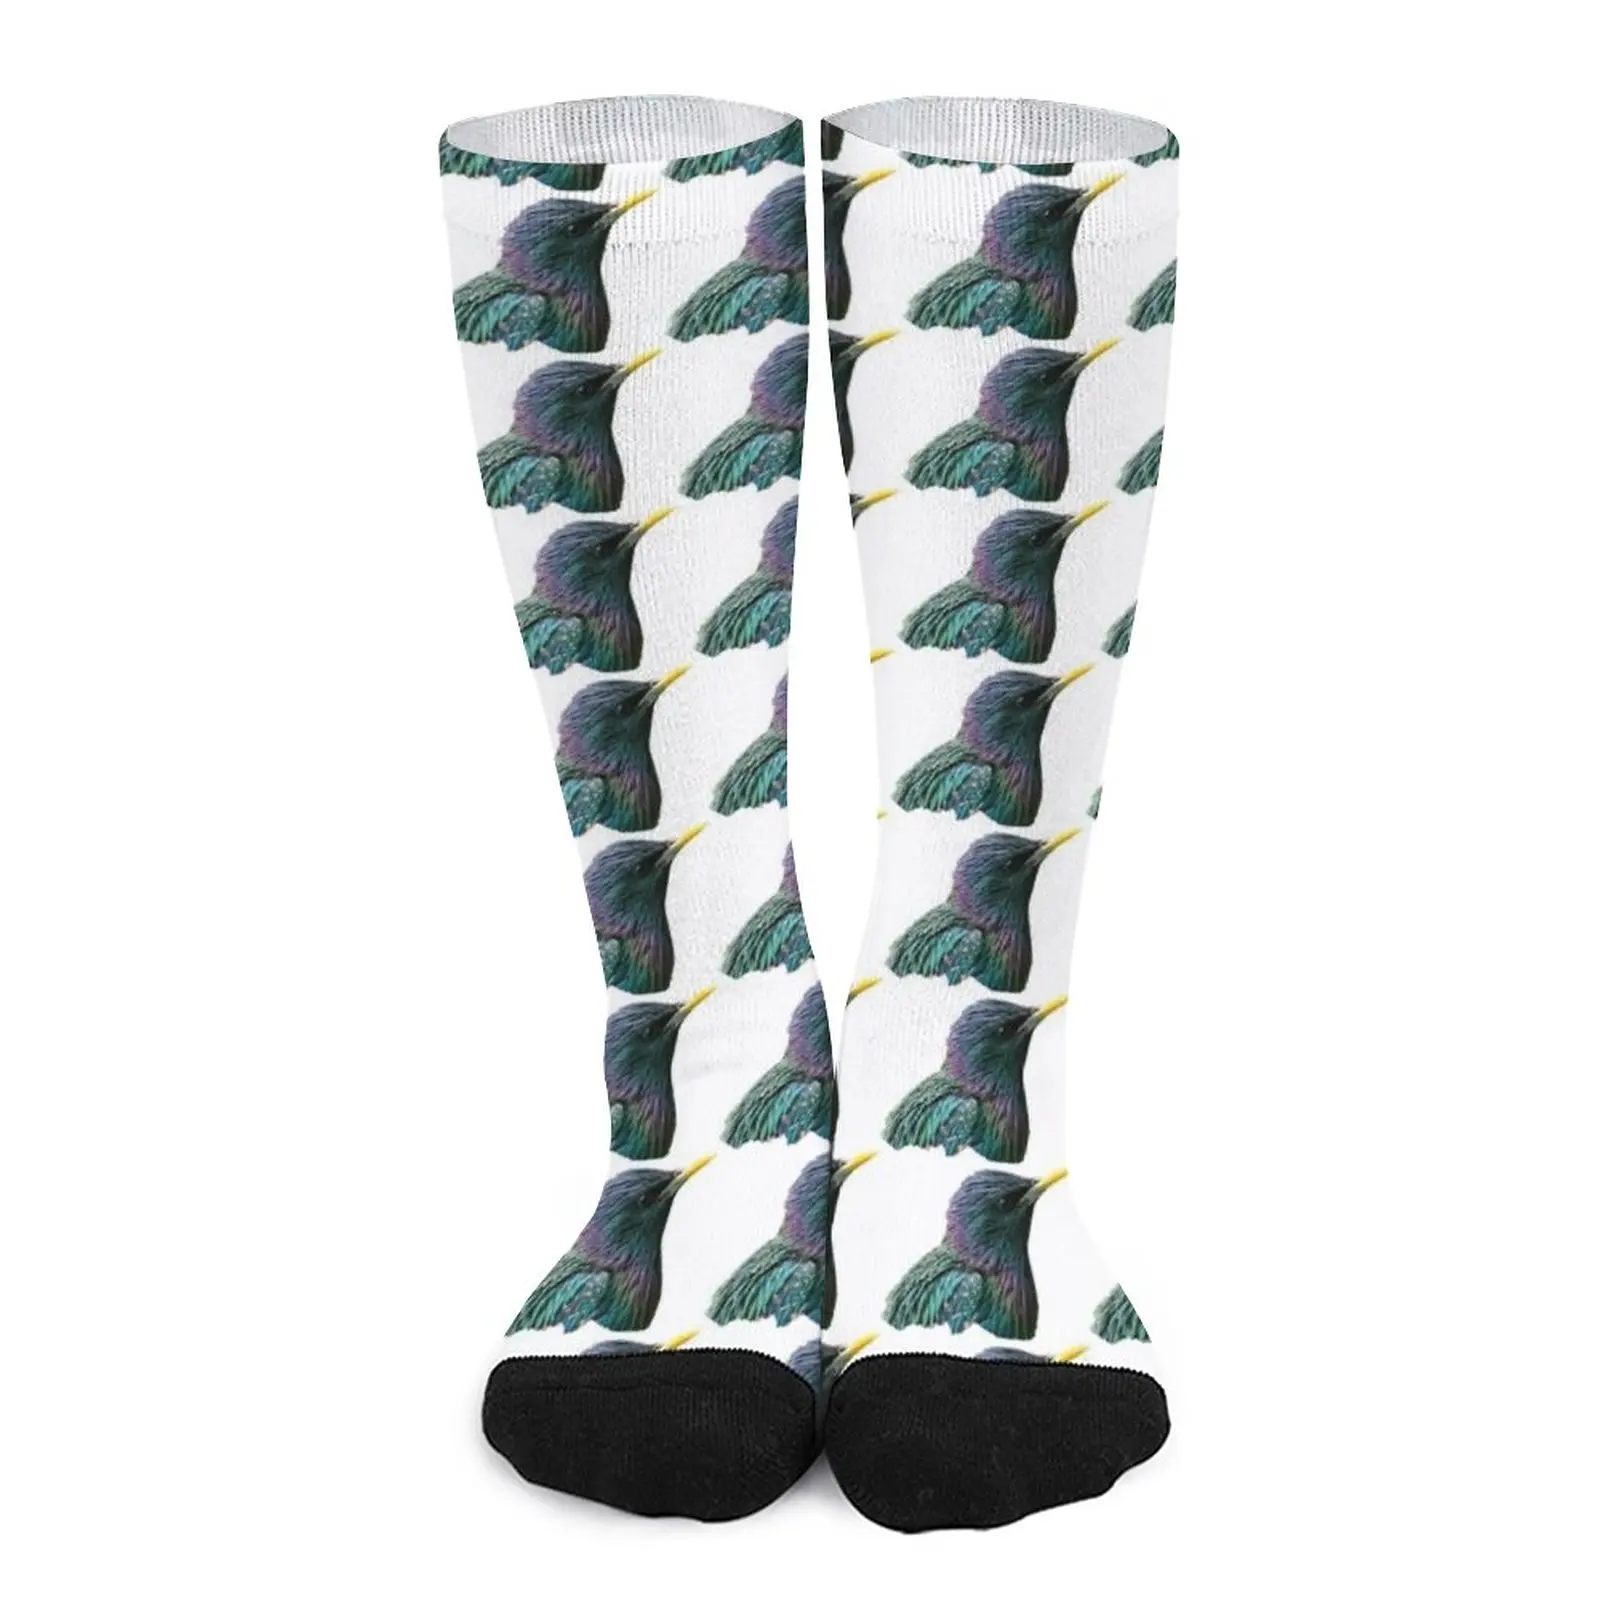 My Starling Socks Women socks ankle socks bat socks antiskid soccer funny sock ankle socks women men s